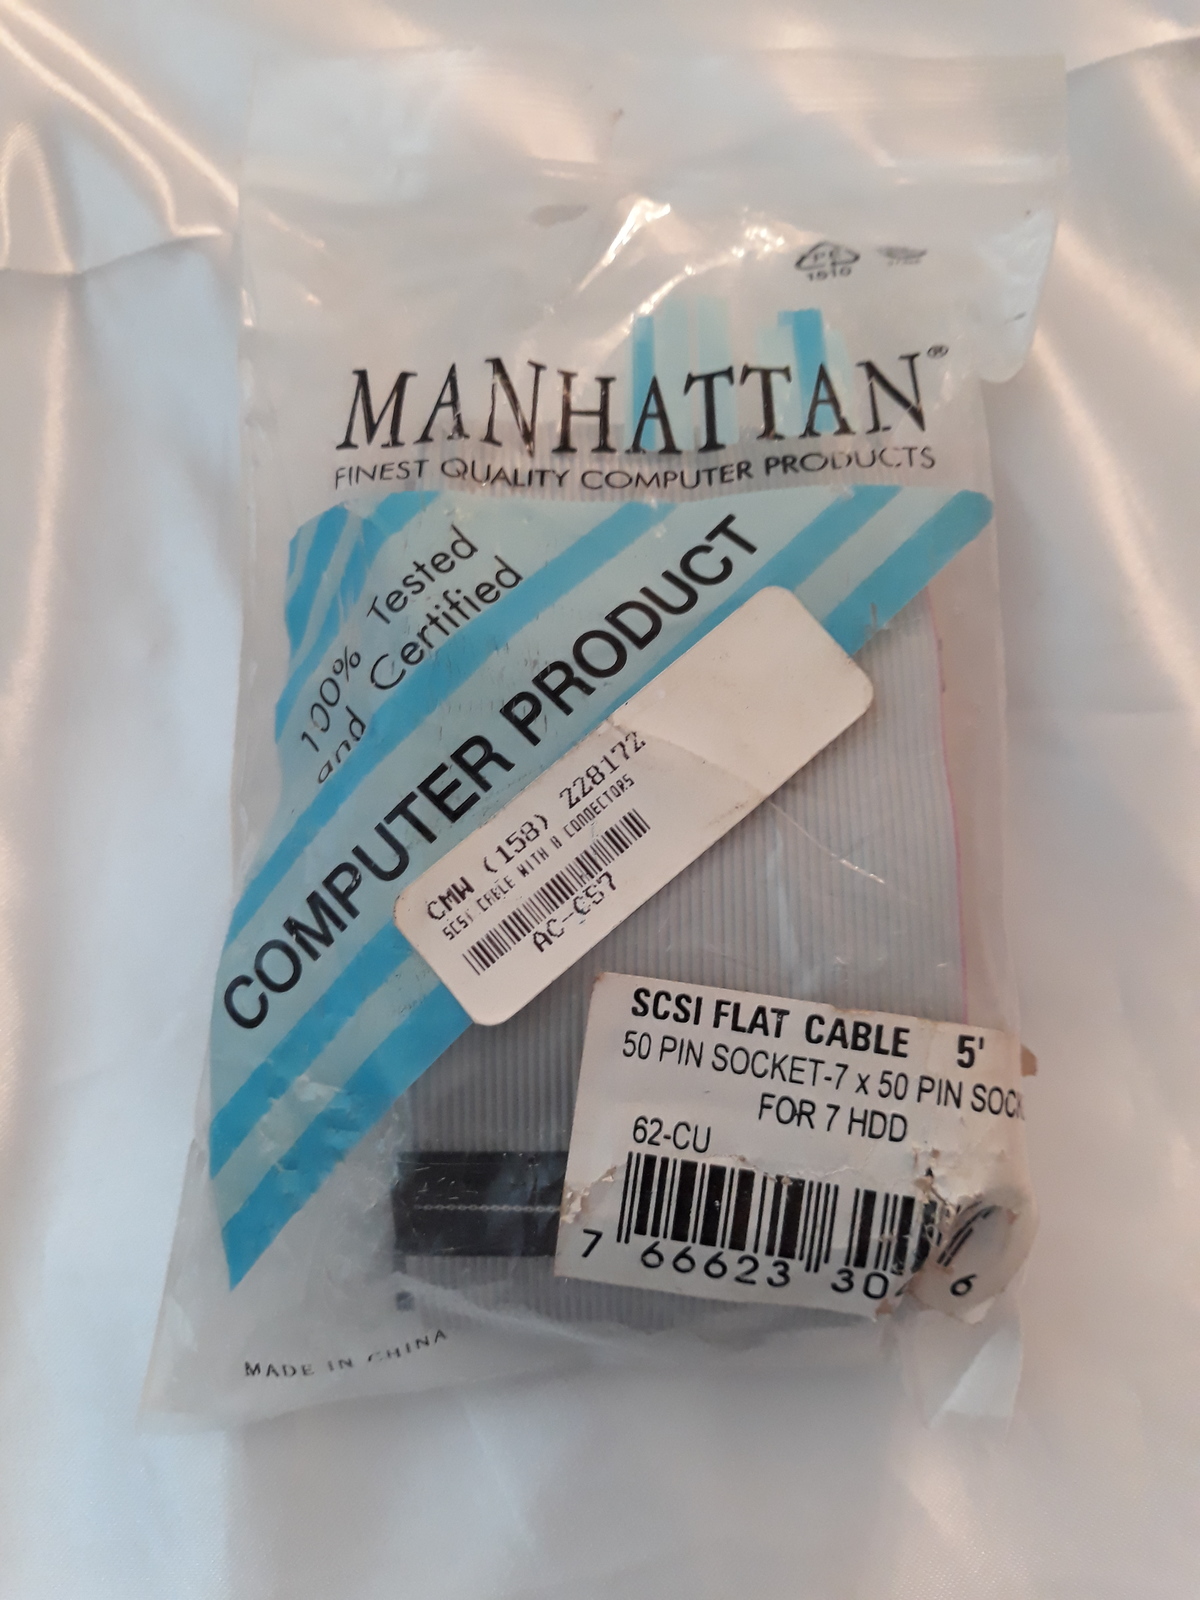 Manhattan SCSI Flat Cable 5' 50 PIN Socket-7 x 50 PIN Socket  - $20.00